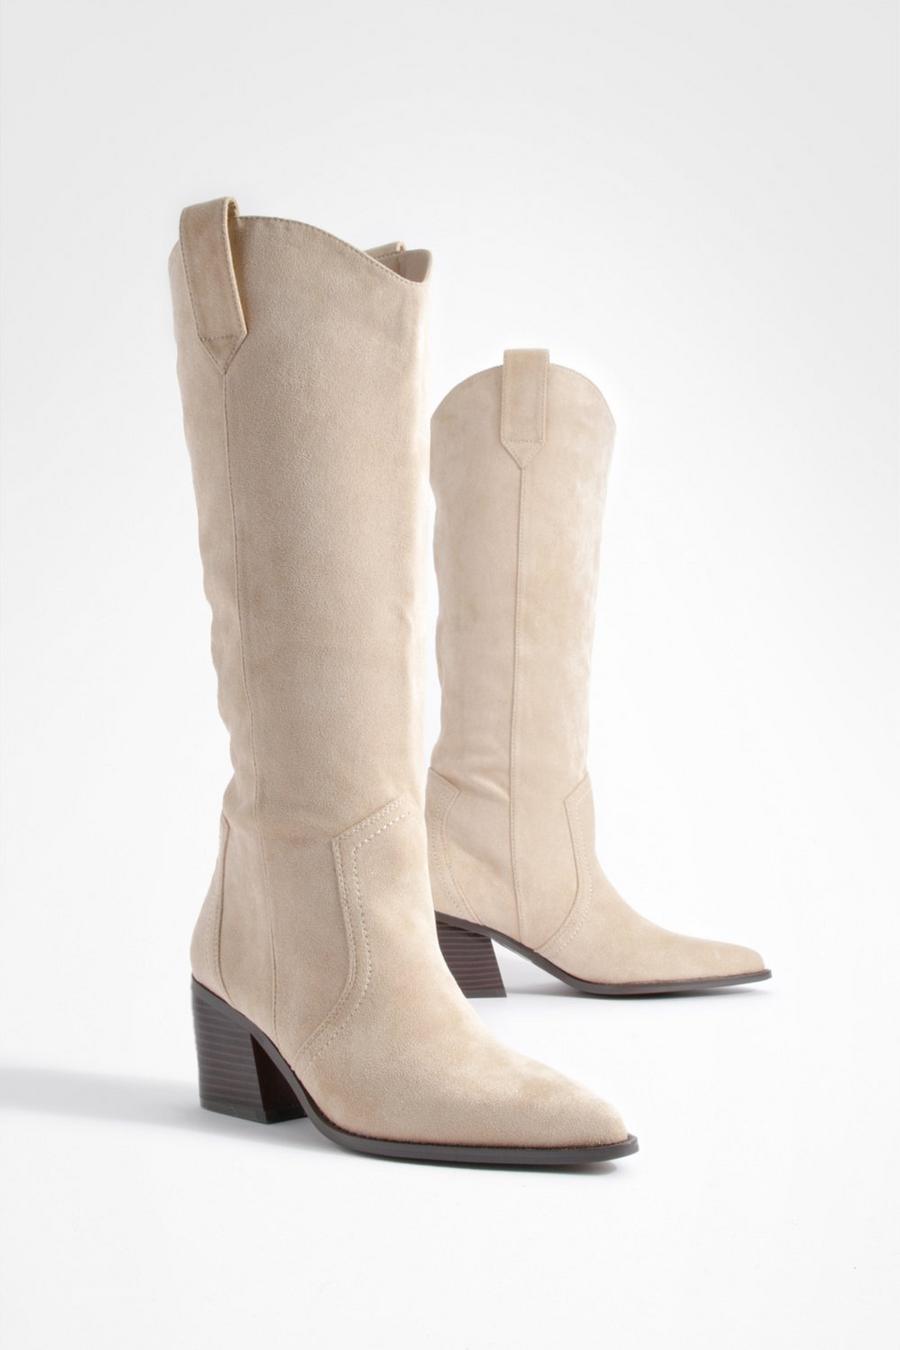 Mink Squared Heel Minimal Western Cowboy Boots